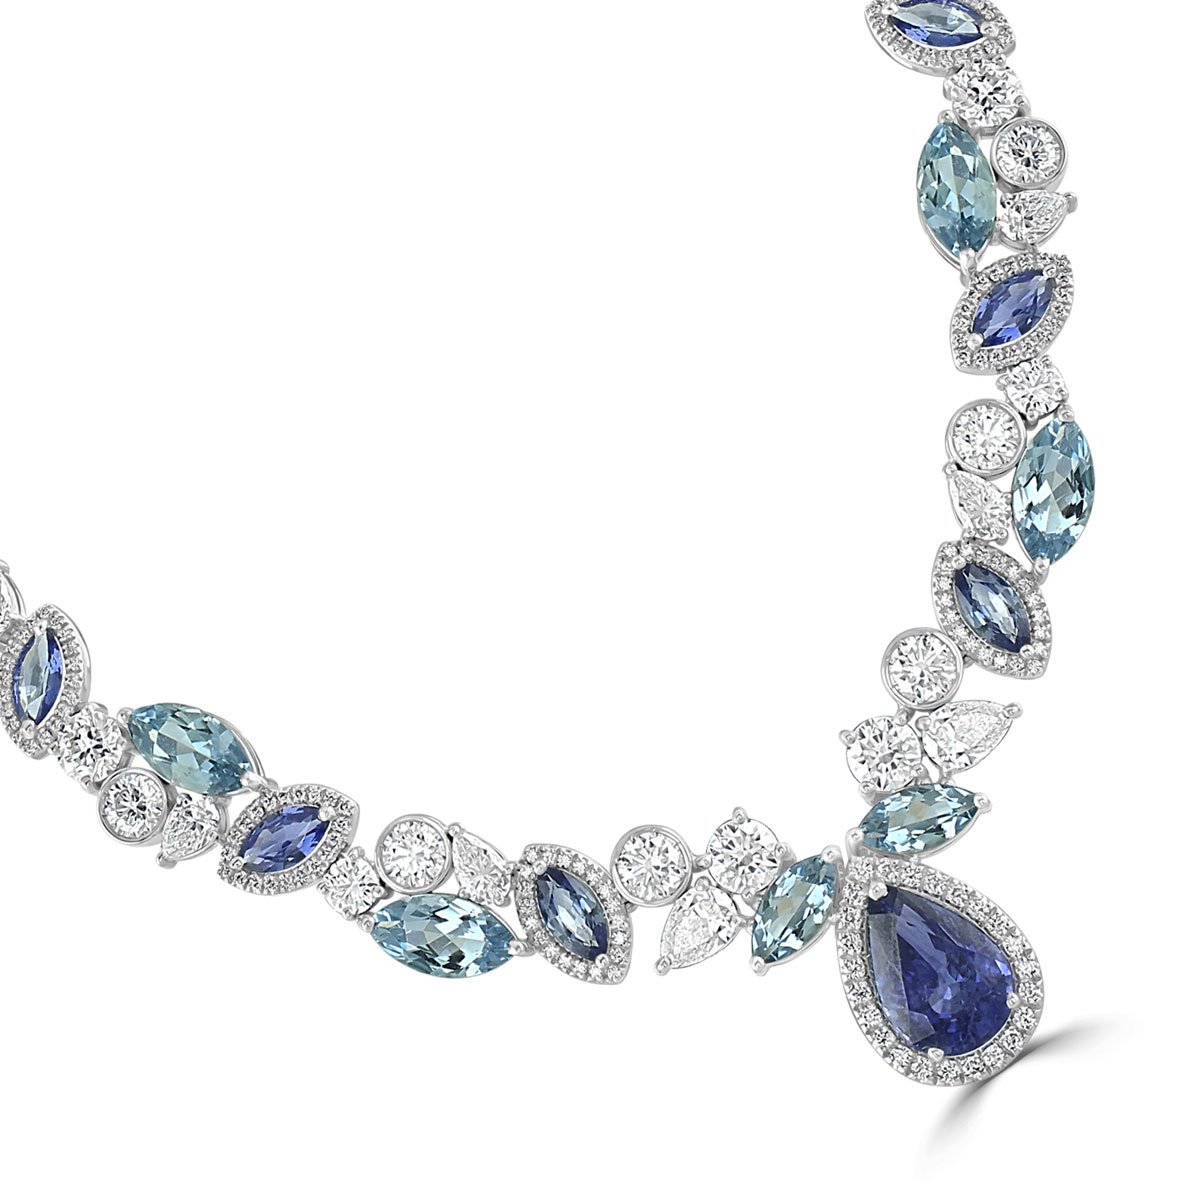 Santa Maria Aquamarine and Diamond Necklace